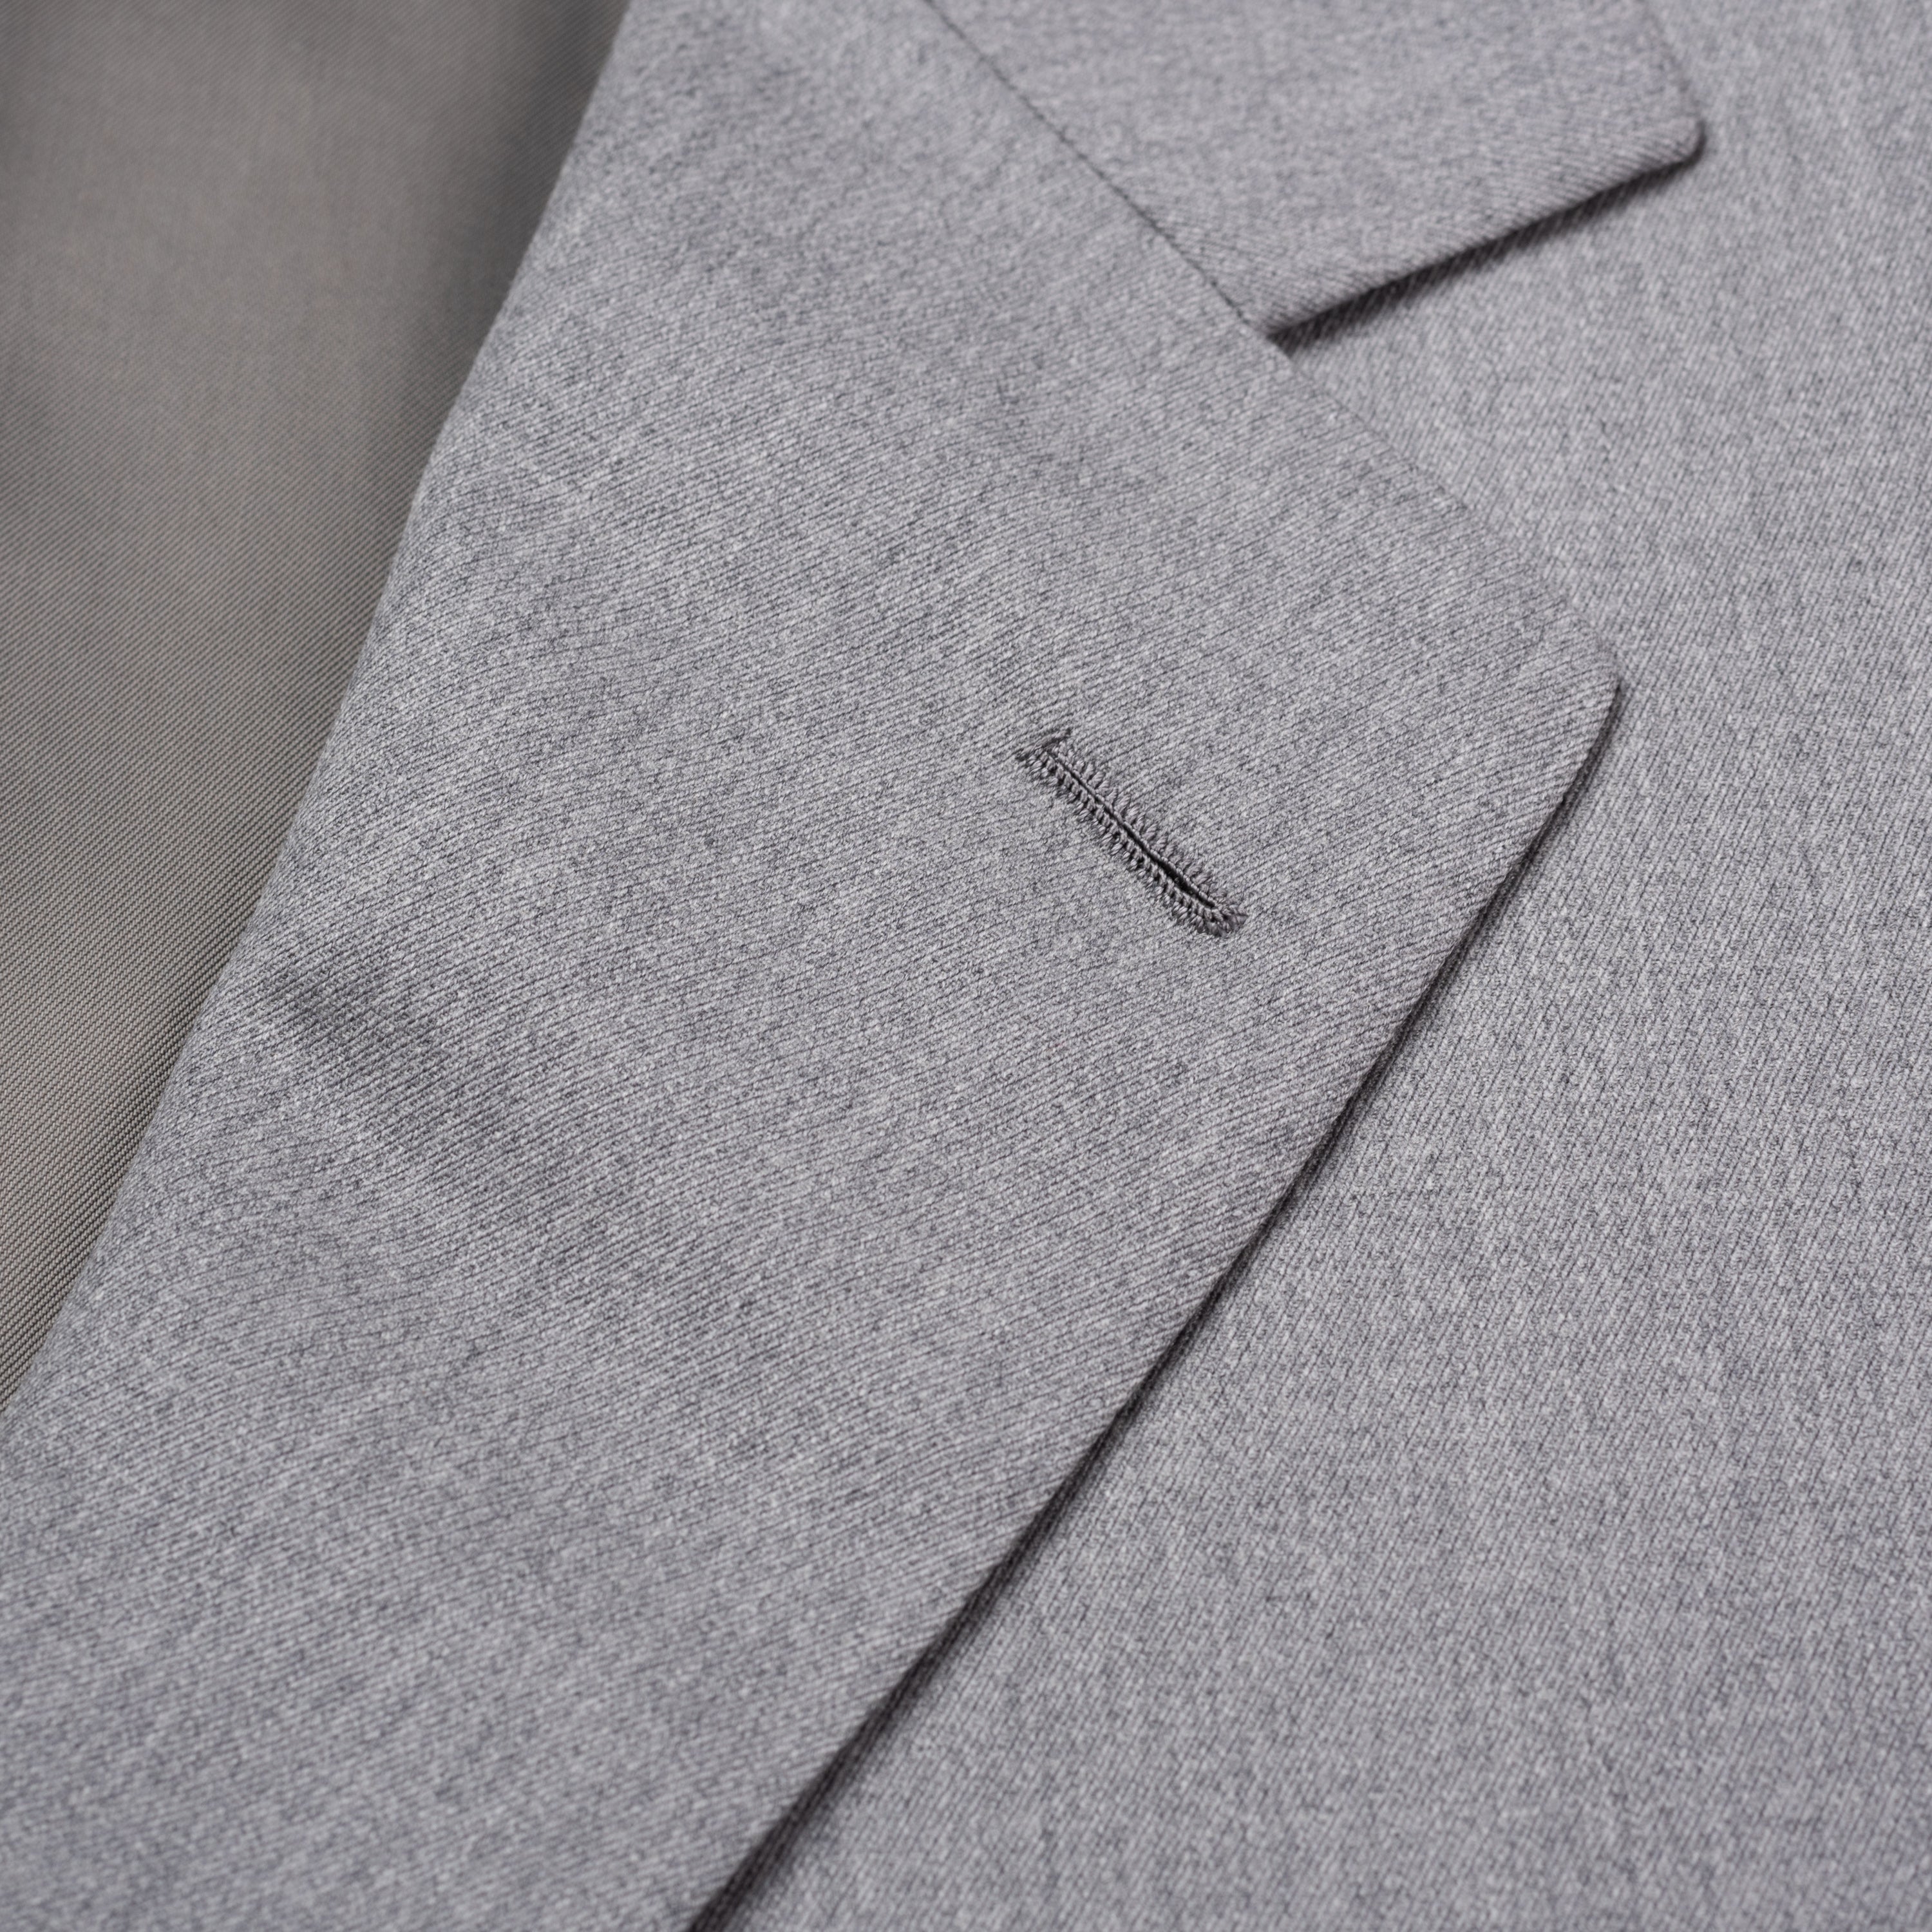 CASTANGIA 1850 Gray Twill Wool Super 120's Suit EU 52 L NEW US 42 Long CASTANGIA